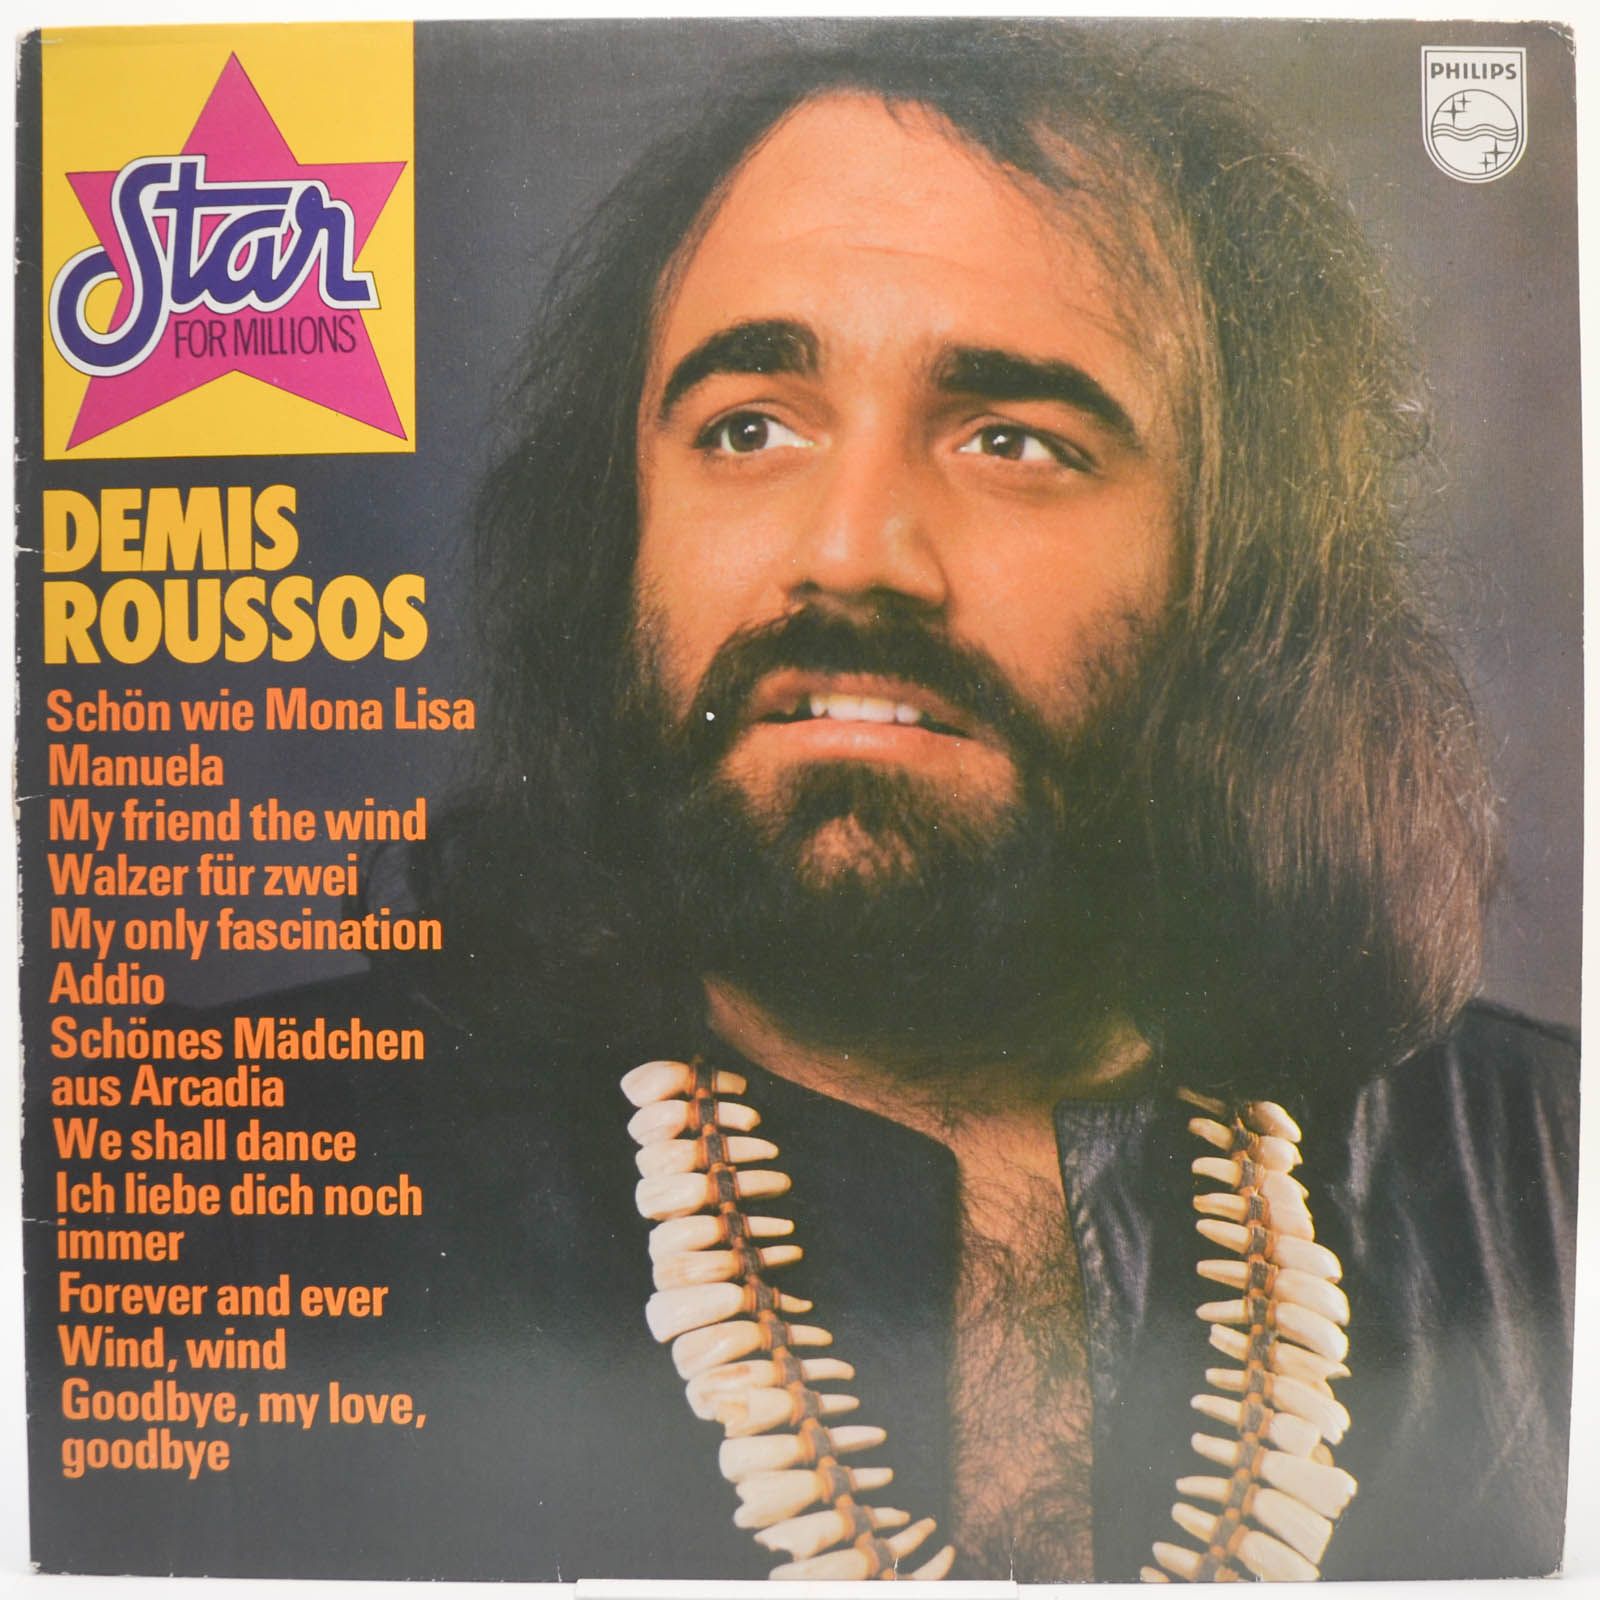 Demis Roussos — Star For Millions, 1976